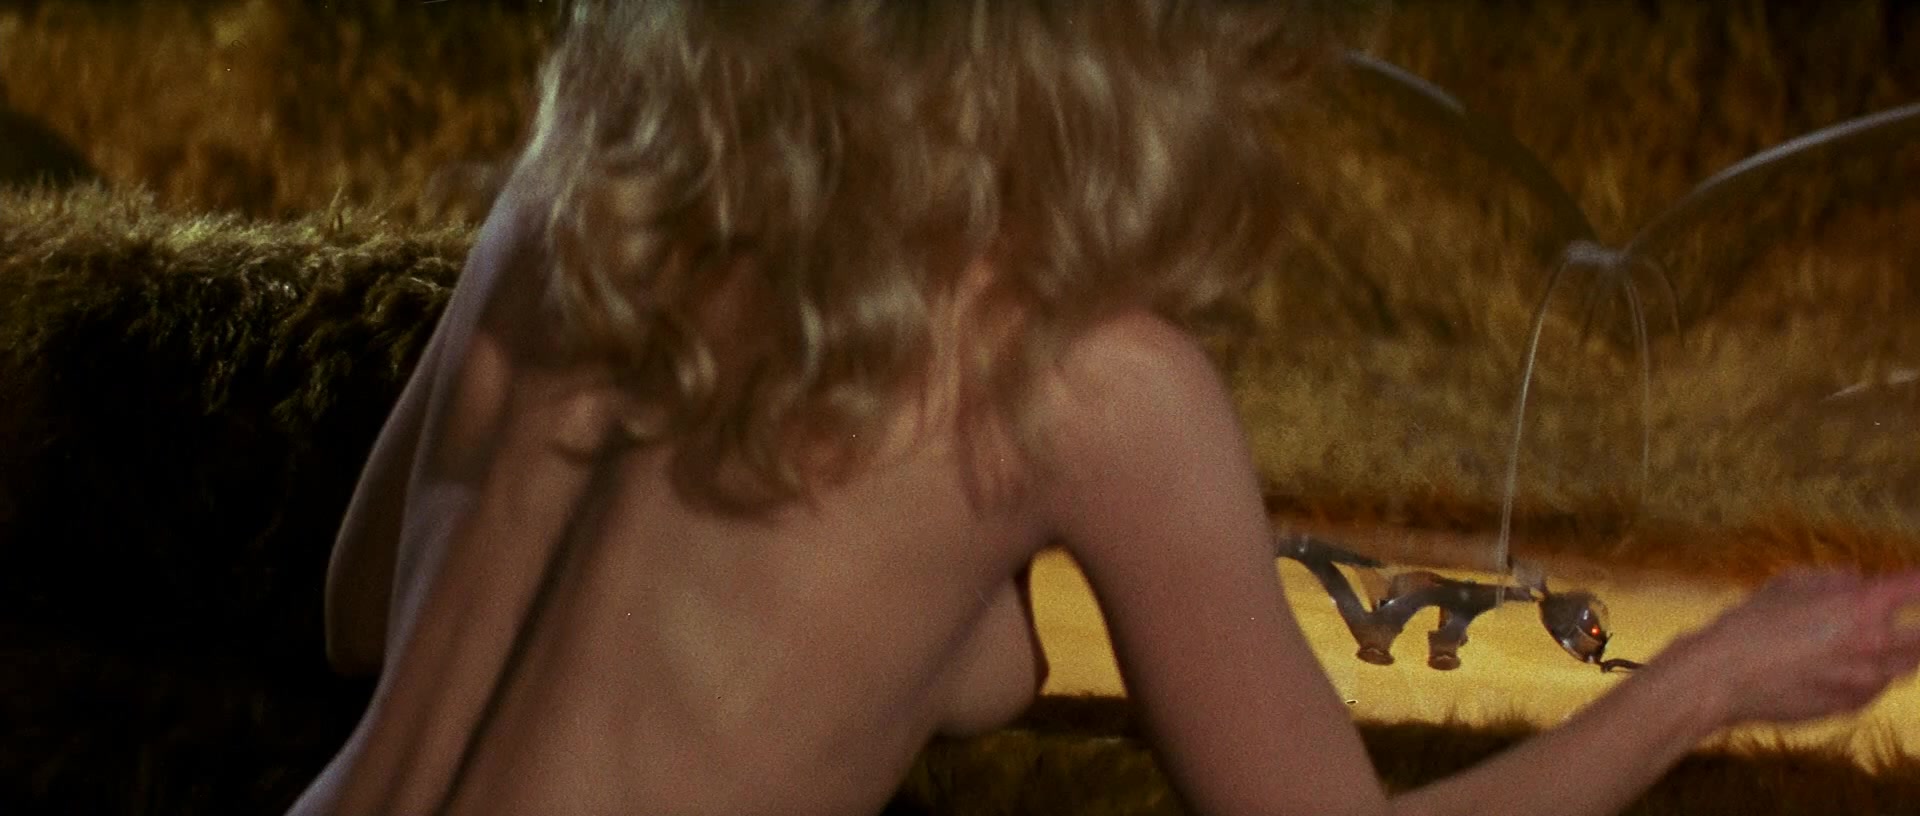 Джейн Фонда nude pics.